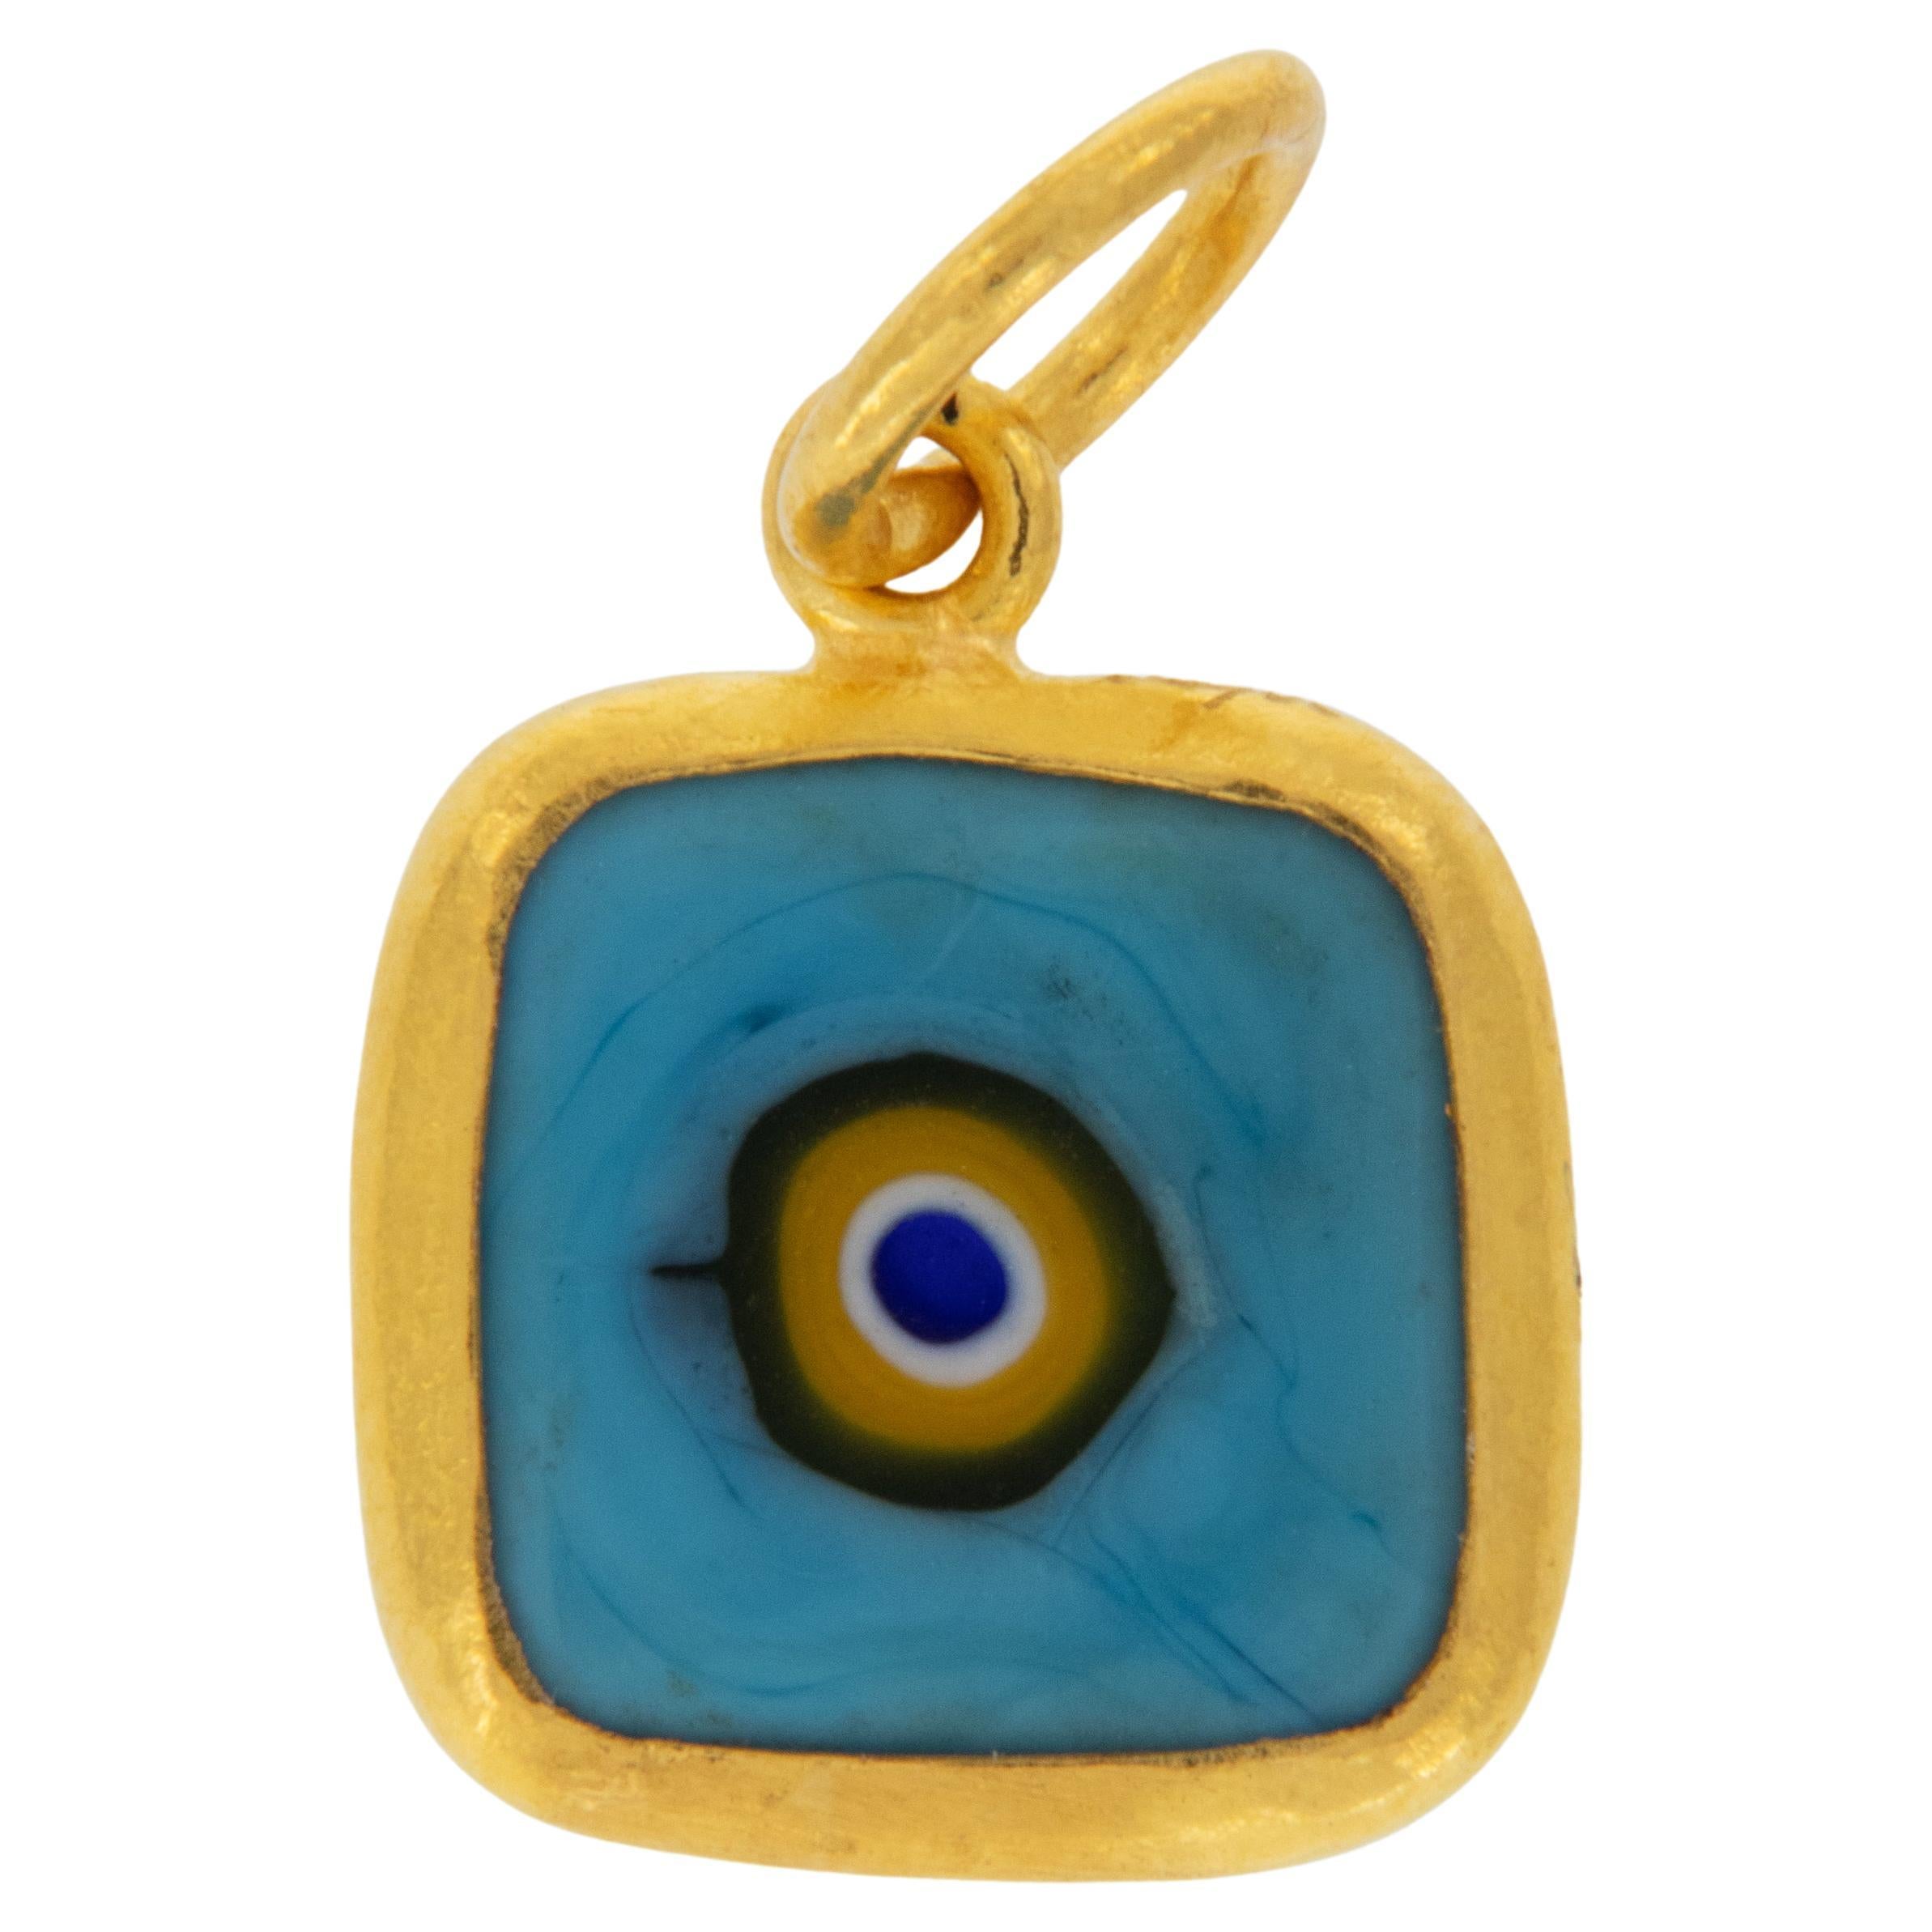  Pure 24 Karat Yellow Gold Square Turquoise Color Evil Eye Pendant Charm